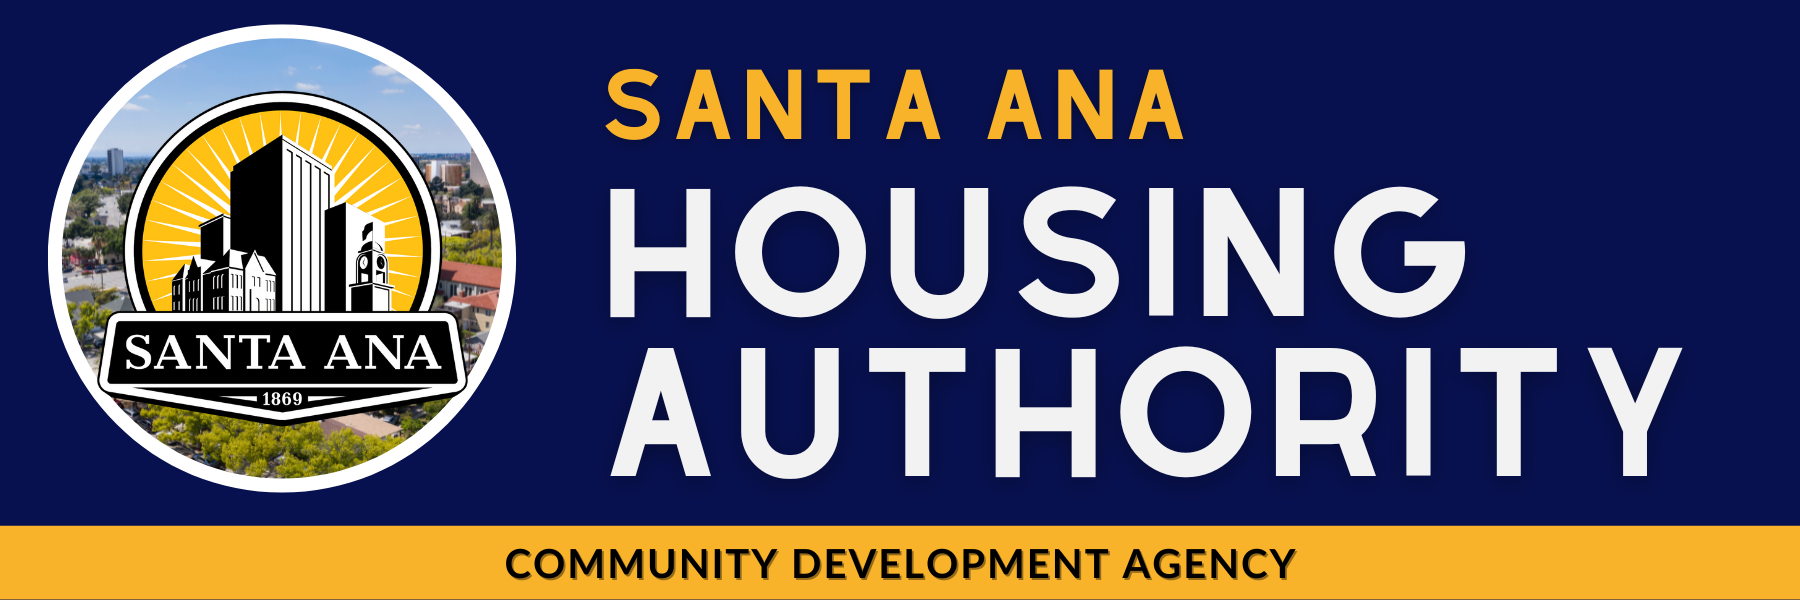 Santa Ana Housing Authority Header Banner